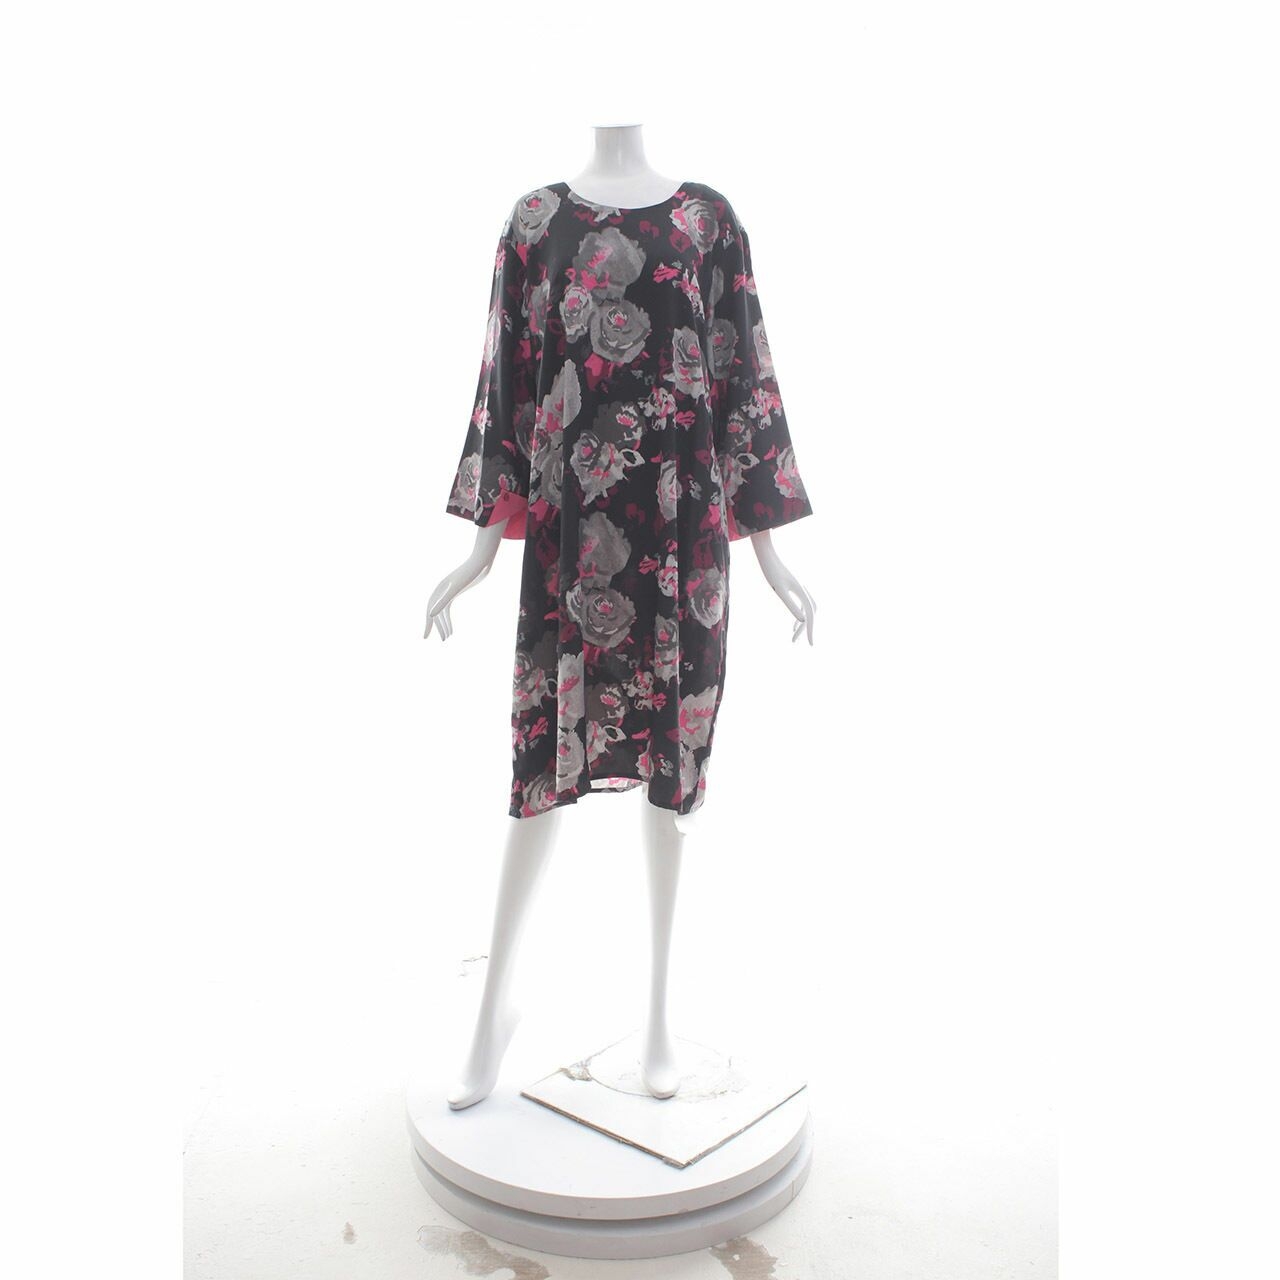 P.S Black & Pink Floral Midi Dress